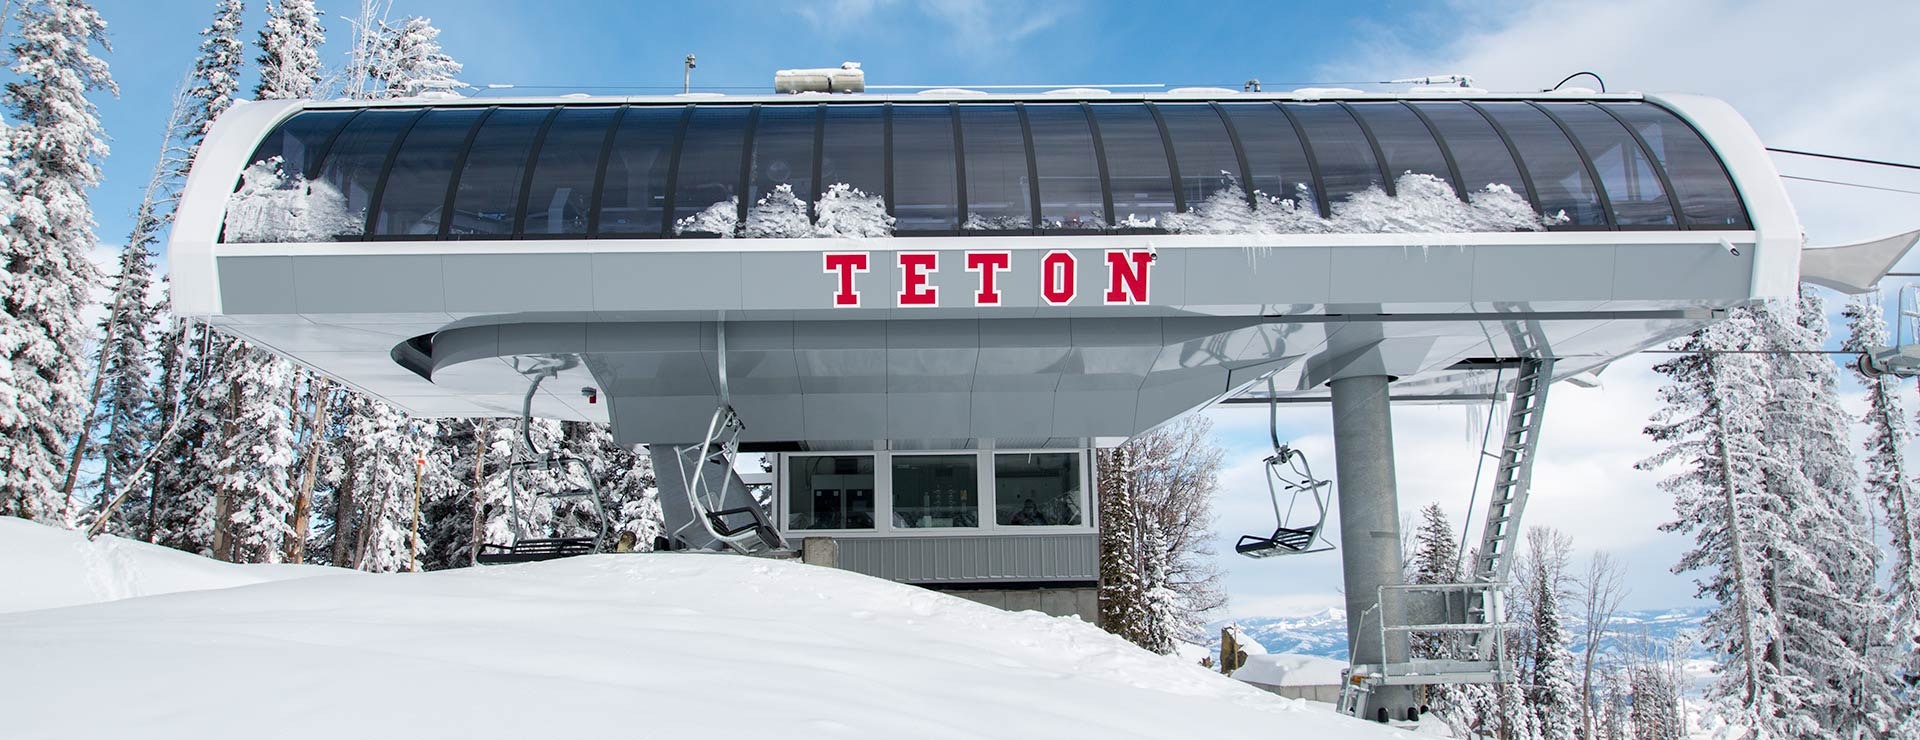 Teton lift top station